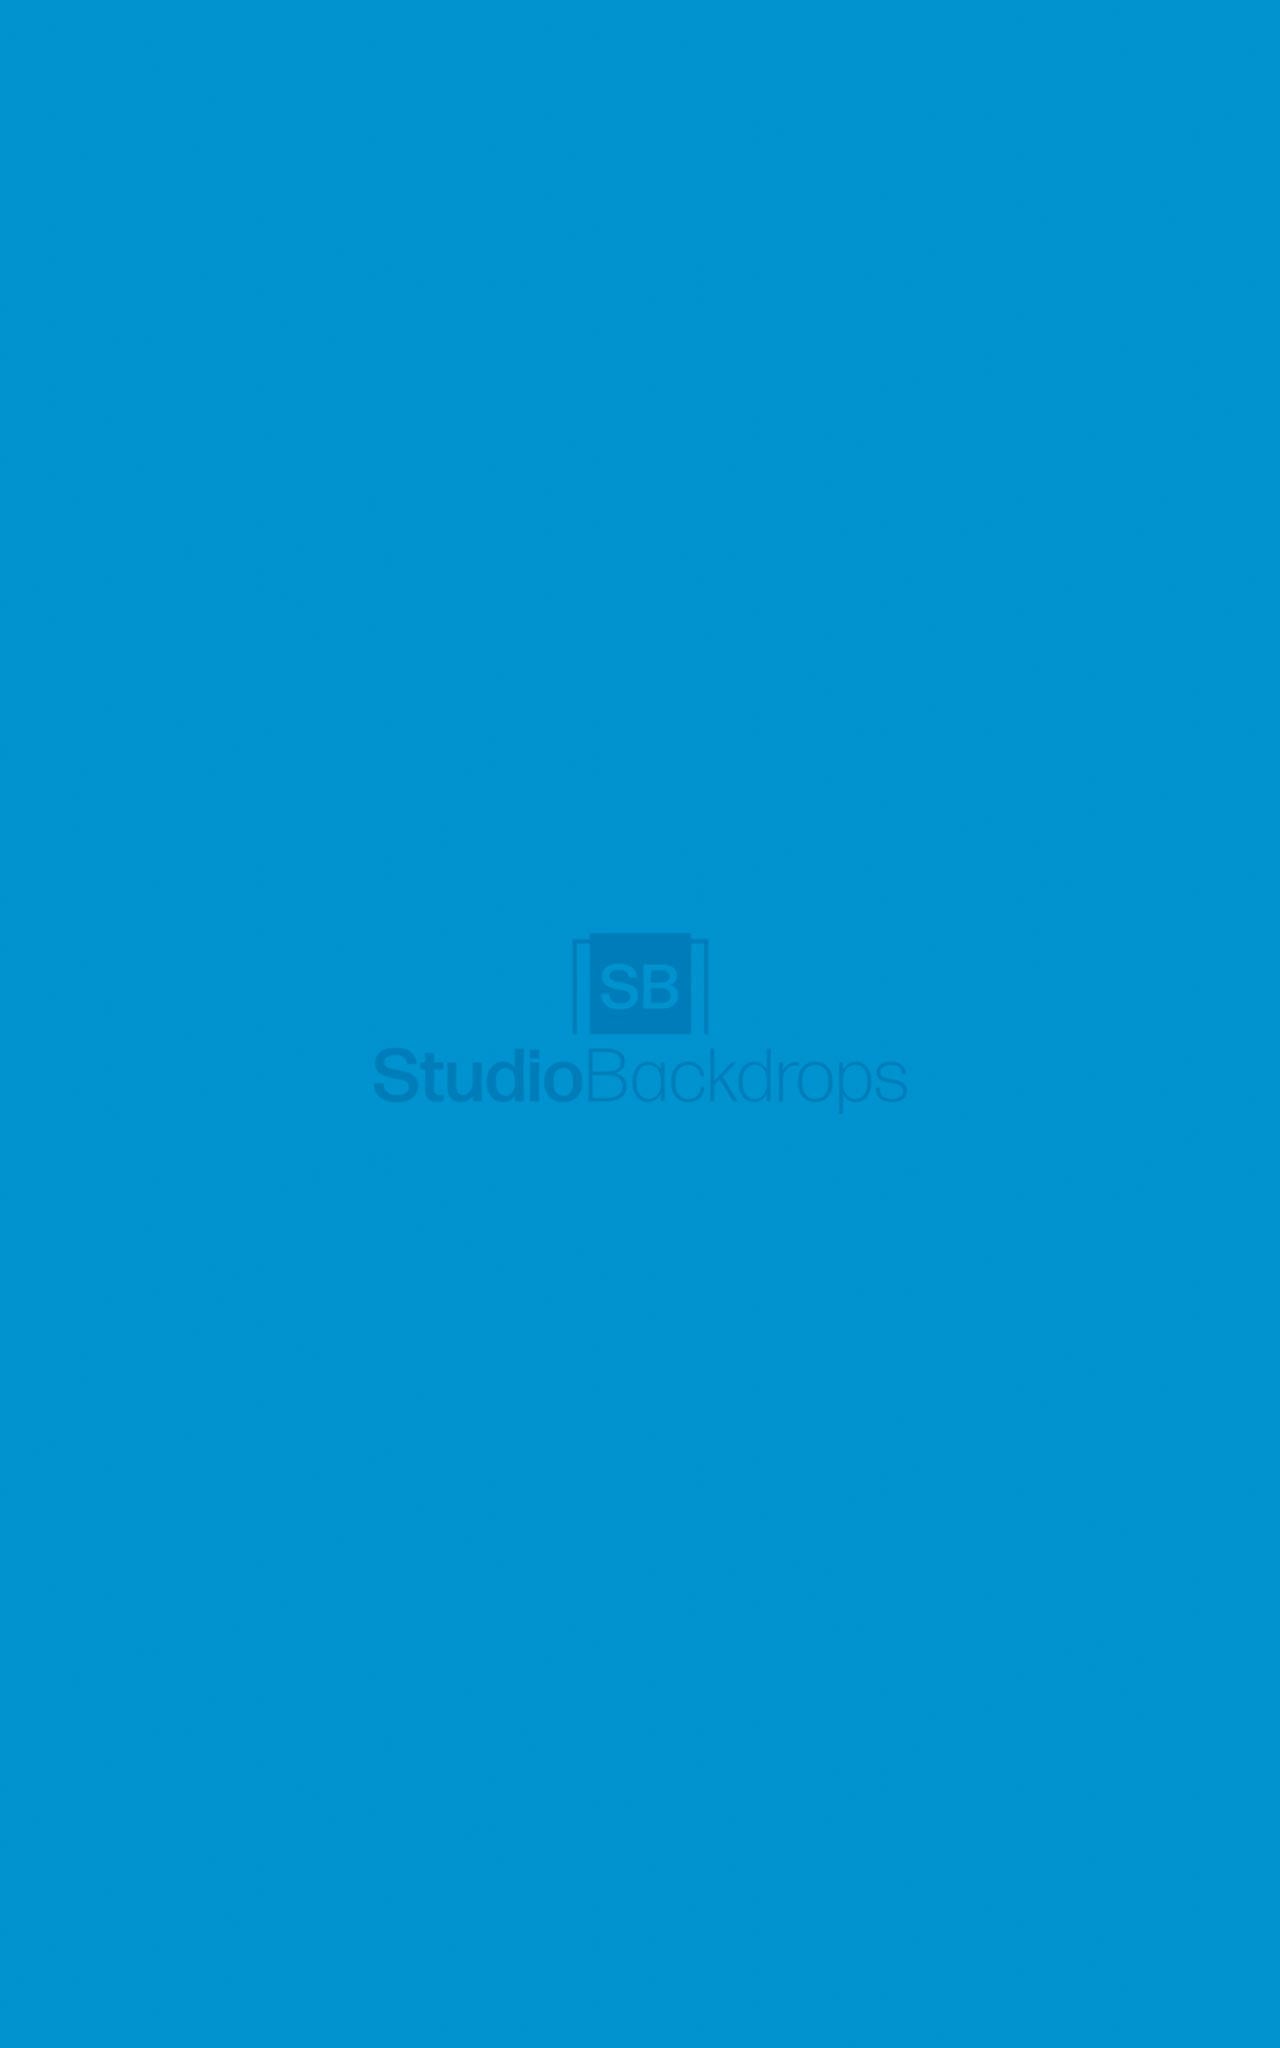 Azure Blue (Pantone 3005) Photography Backdrop BD-132-SOL – Studio Backdrops